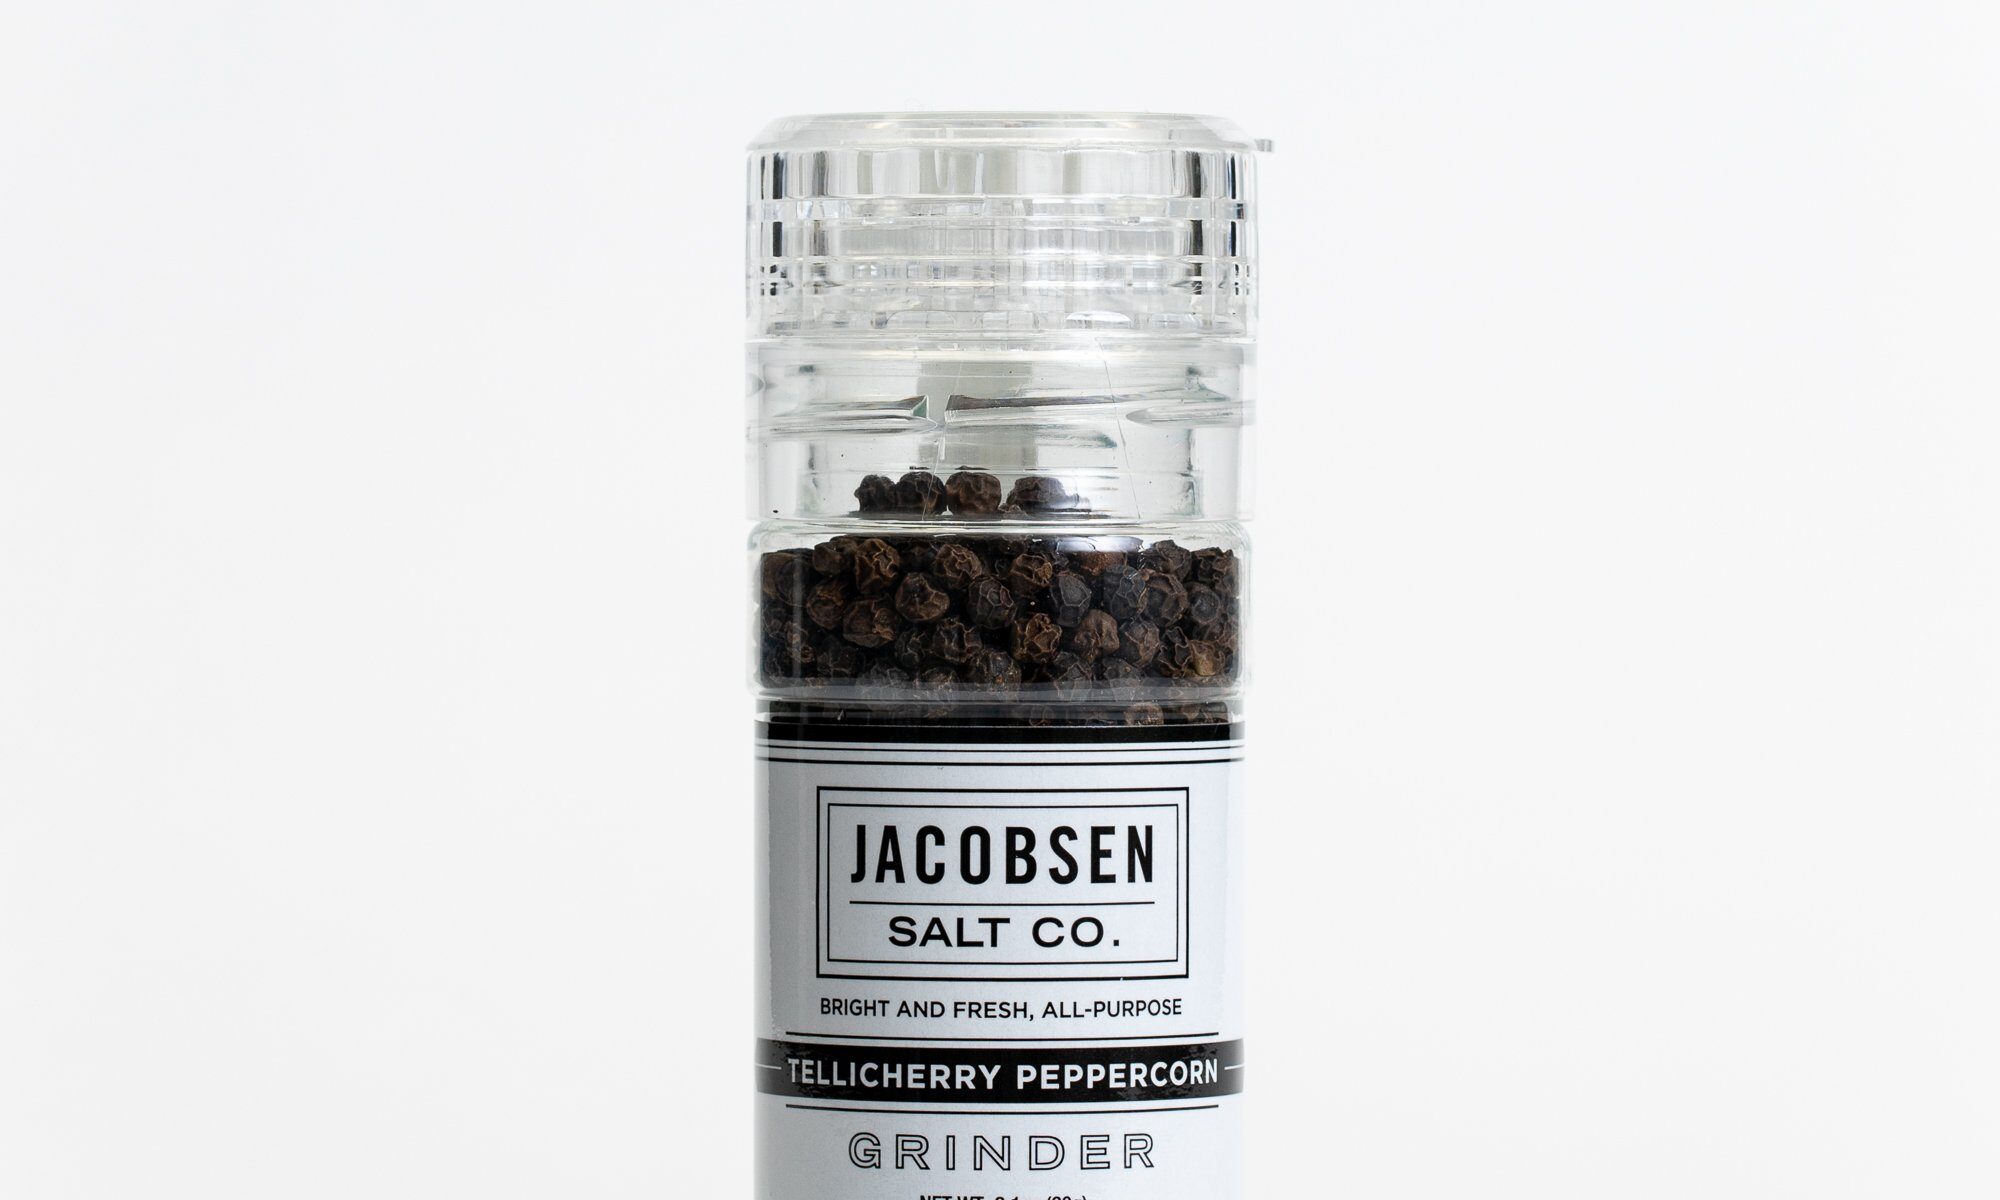 Image of a Jacobsen Salt Co. Tellicherry Peppercorn Grinder